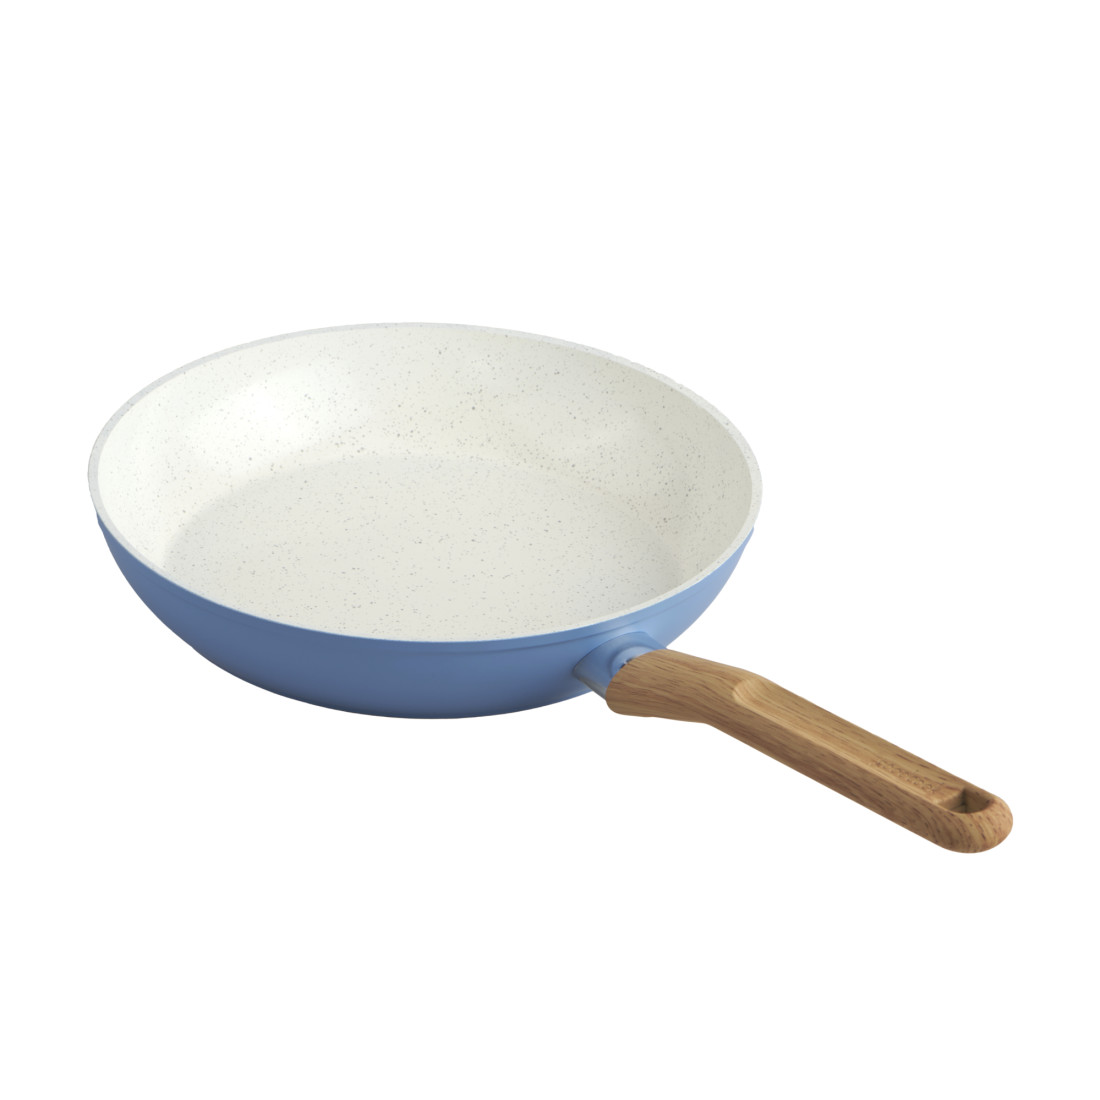 GoodCook Healthy Ceramic Titanium-infused Fry pan, 10 Inch, Light